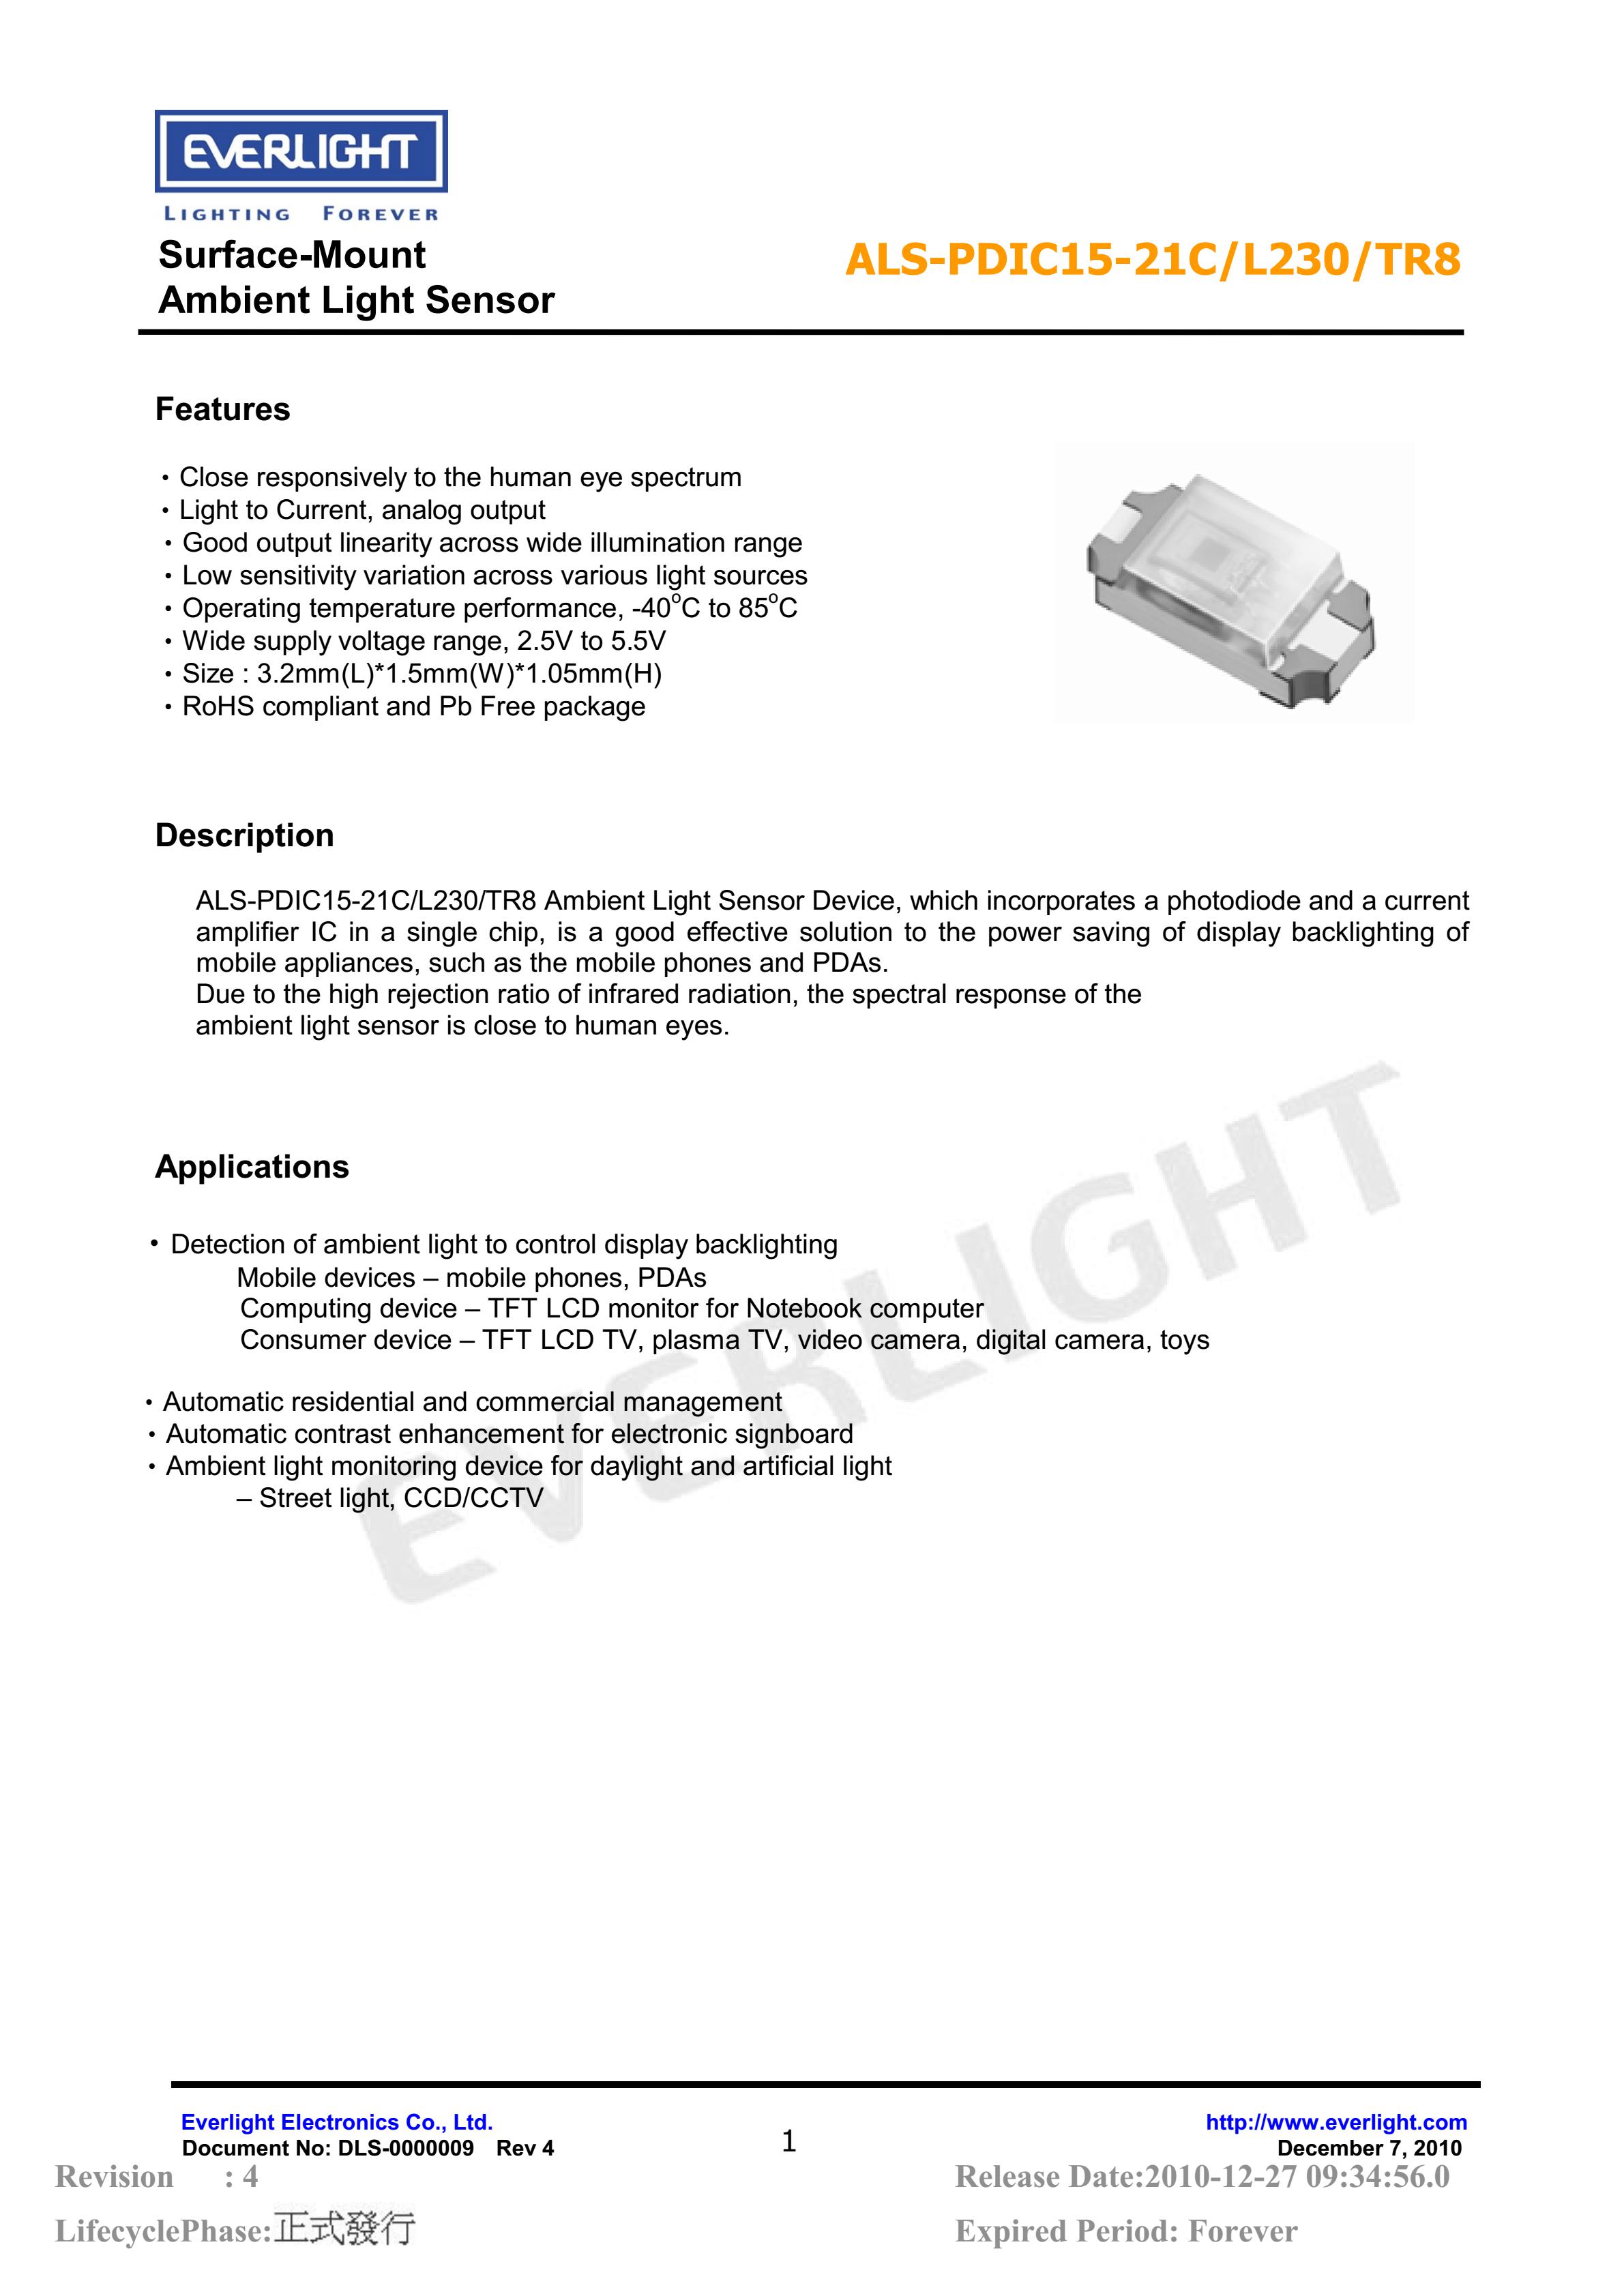 EVERLIGHT SMD 1206 AMBIENT LIGHT SENSOR ALS-PDIC15-21C/L230/TR8 Datasheet